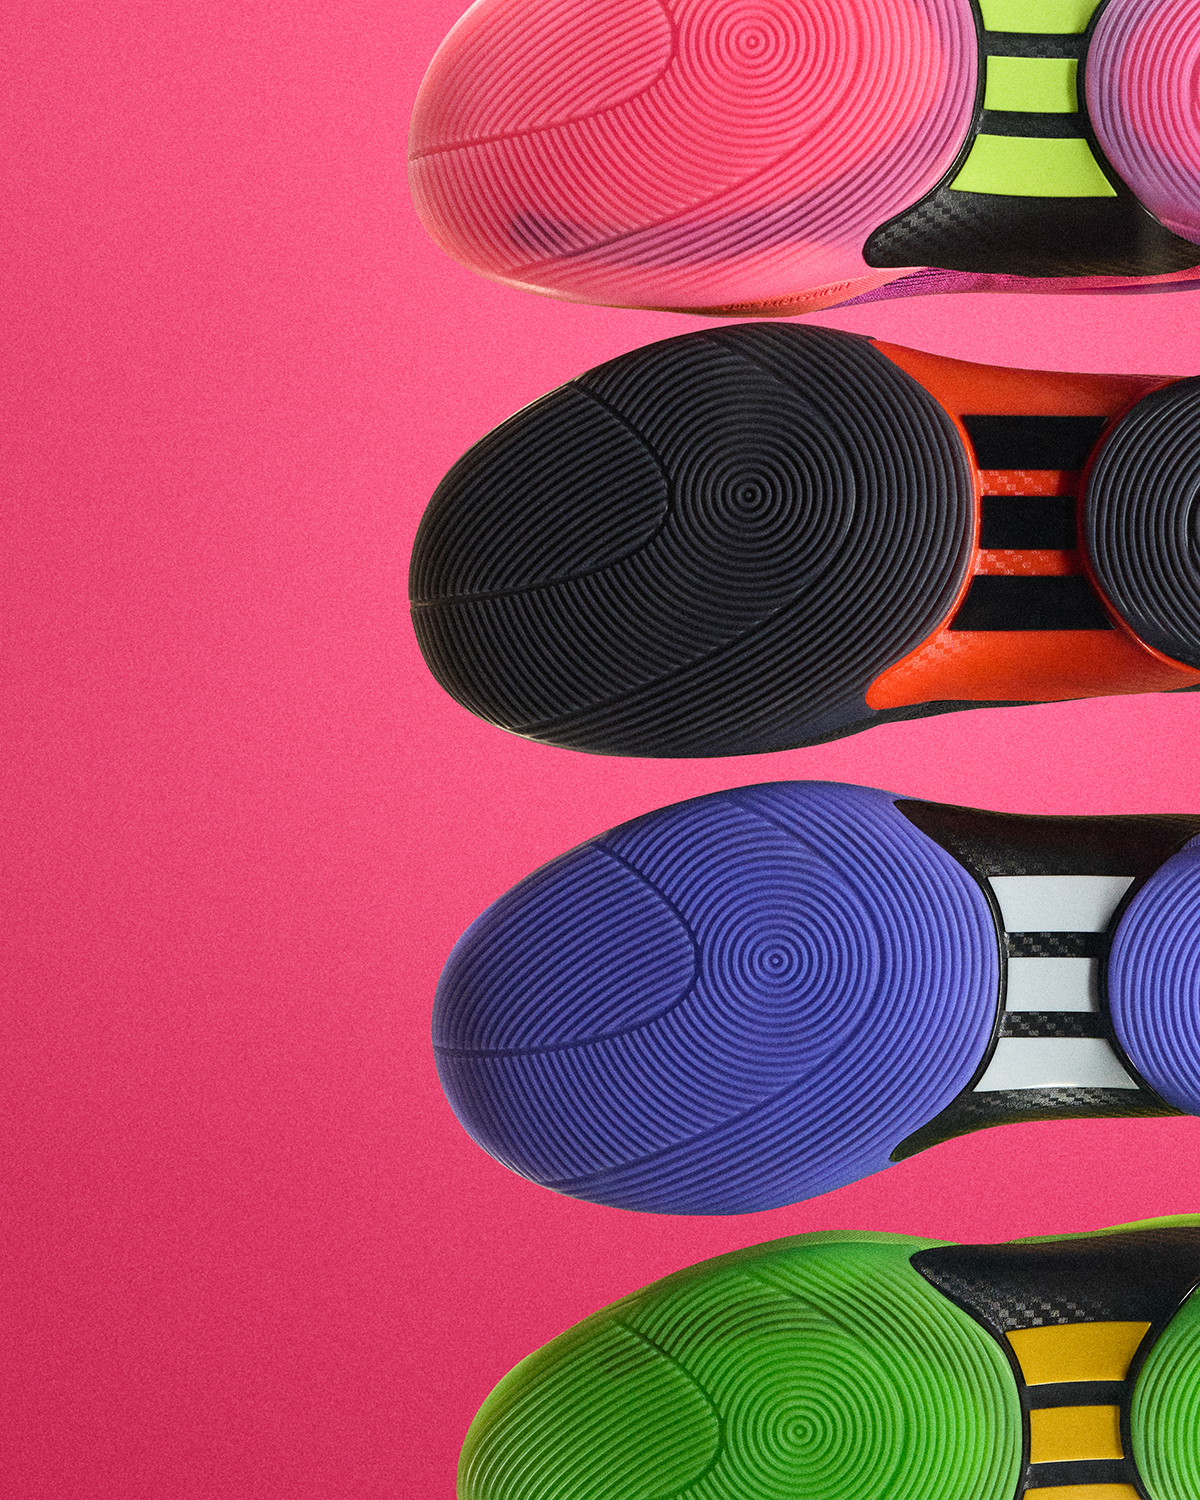 Adidas Don Issue 6 Colorways Revealed 3